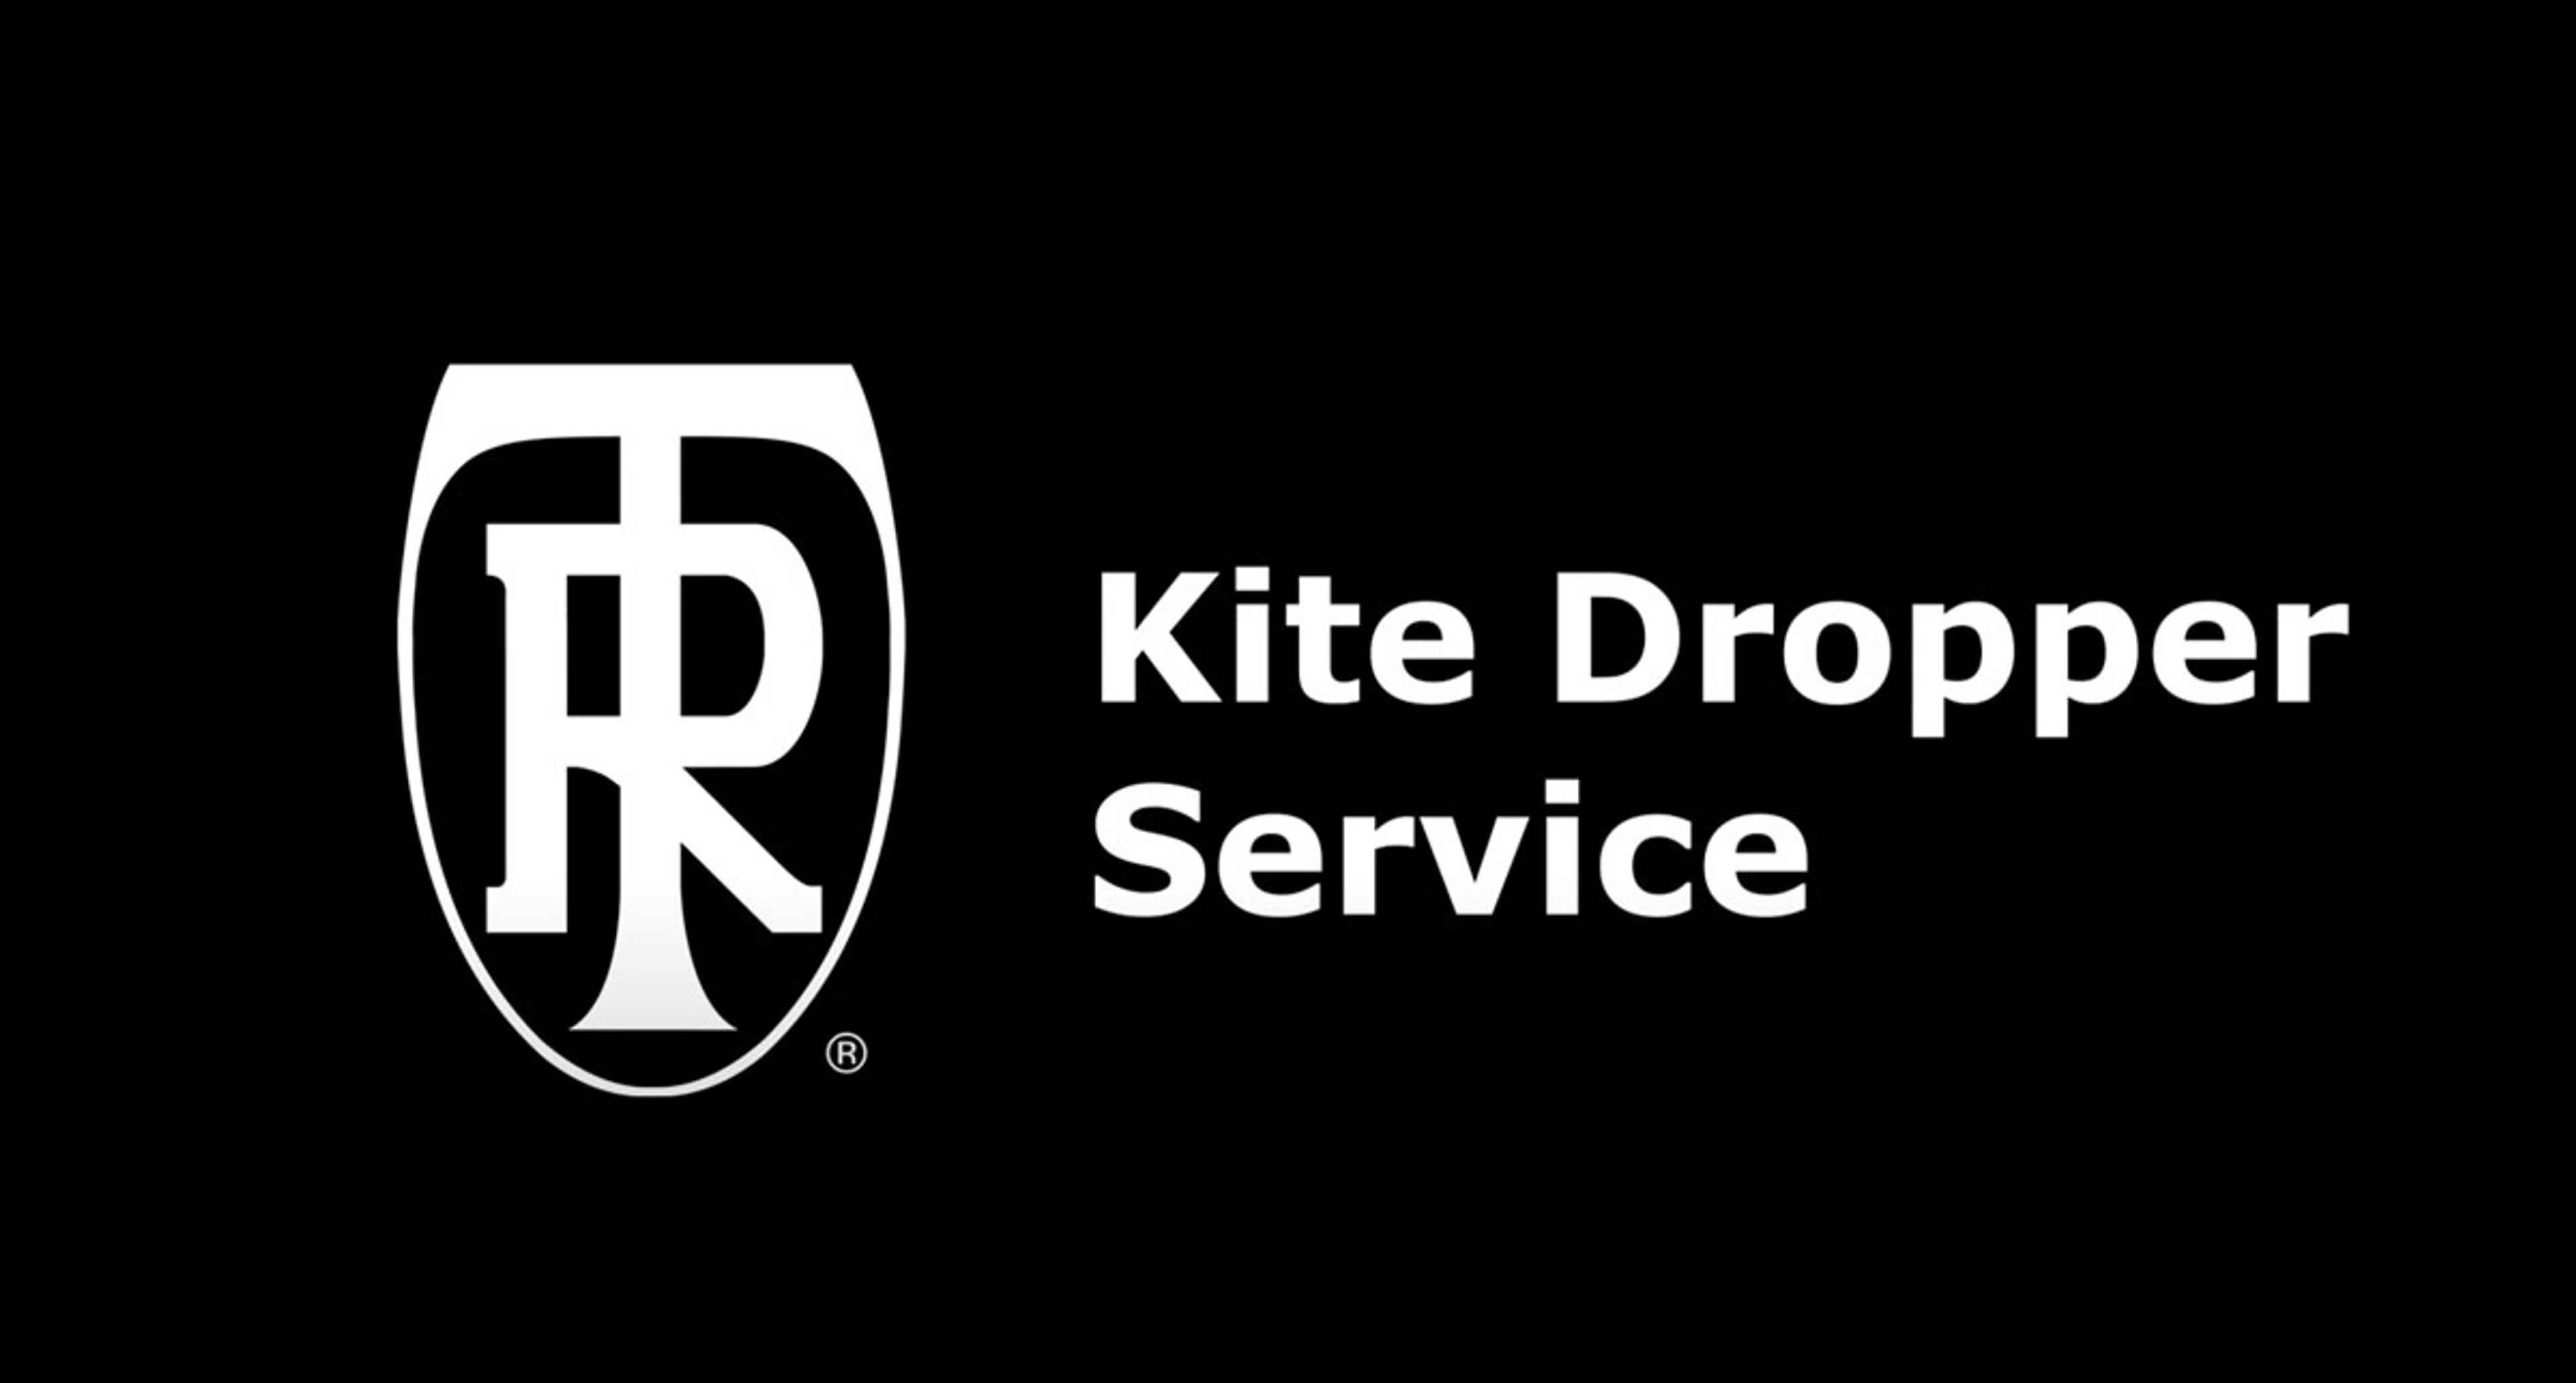 kite dropper service video